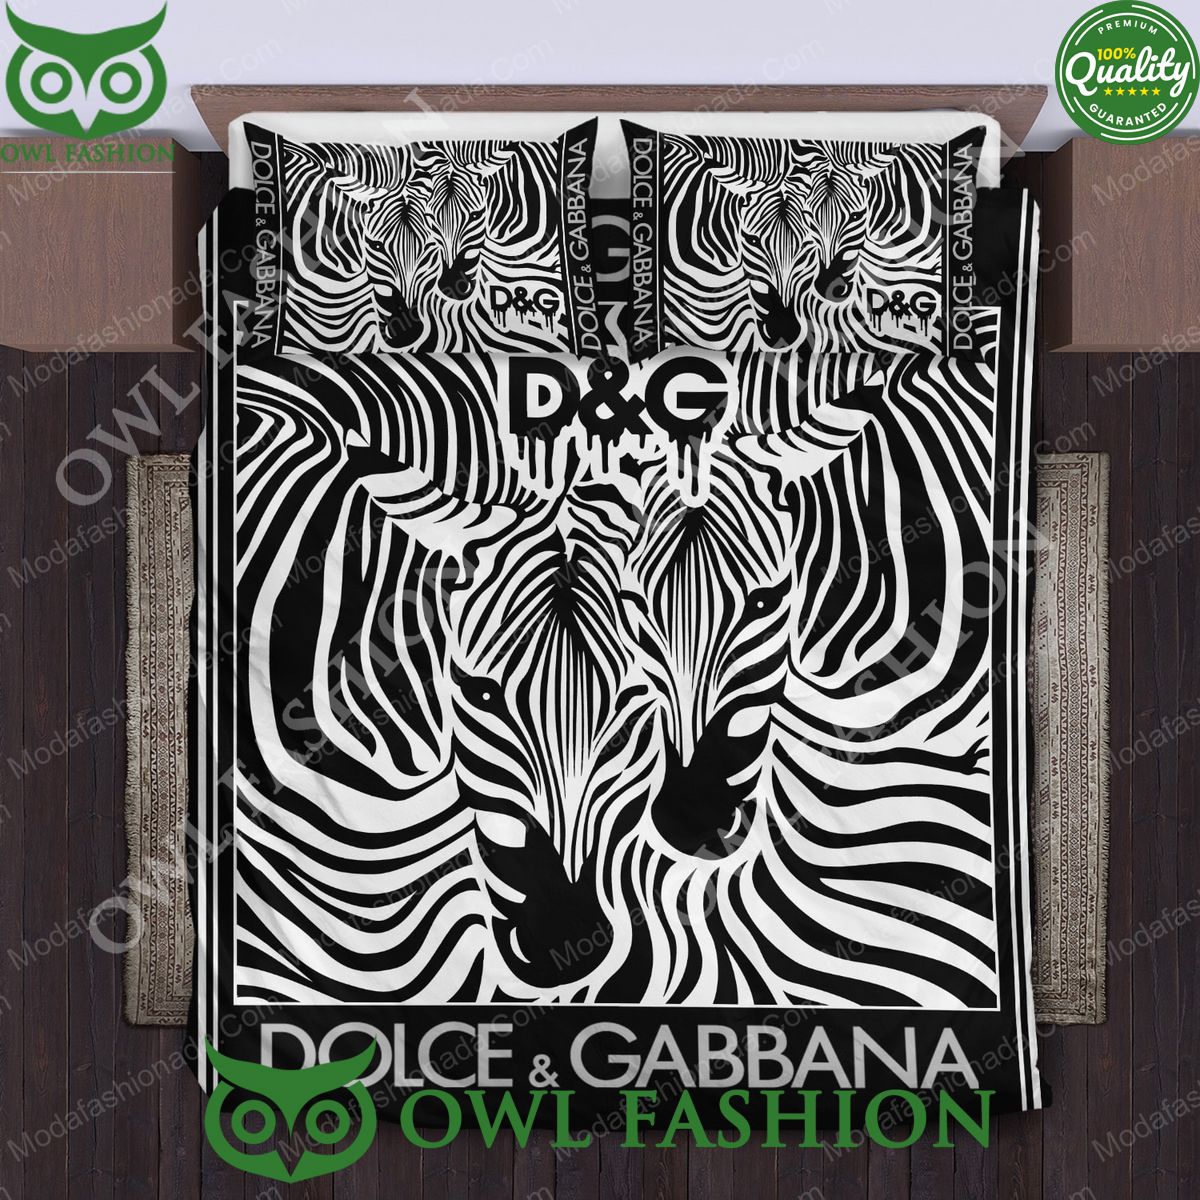 Horse Dolce and Gabbana Zebra Bedding Sets